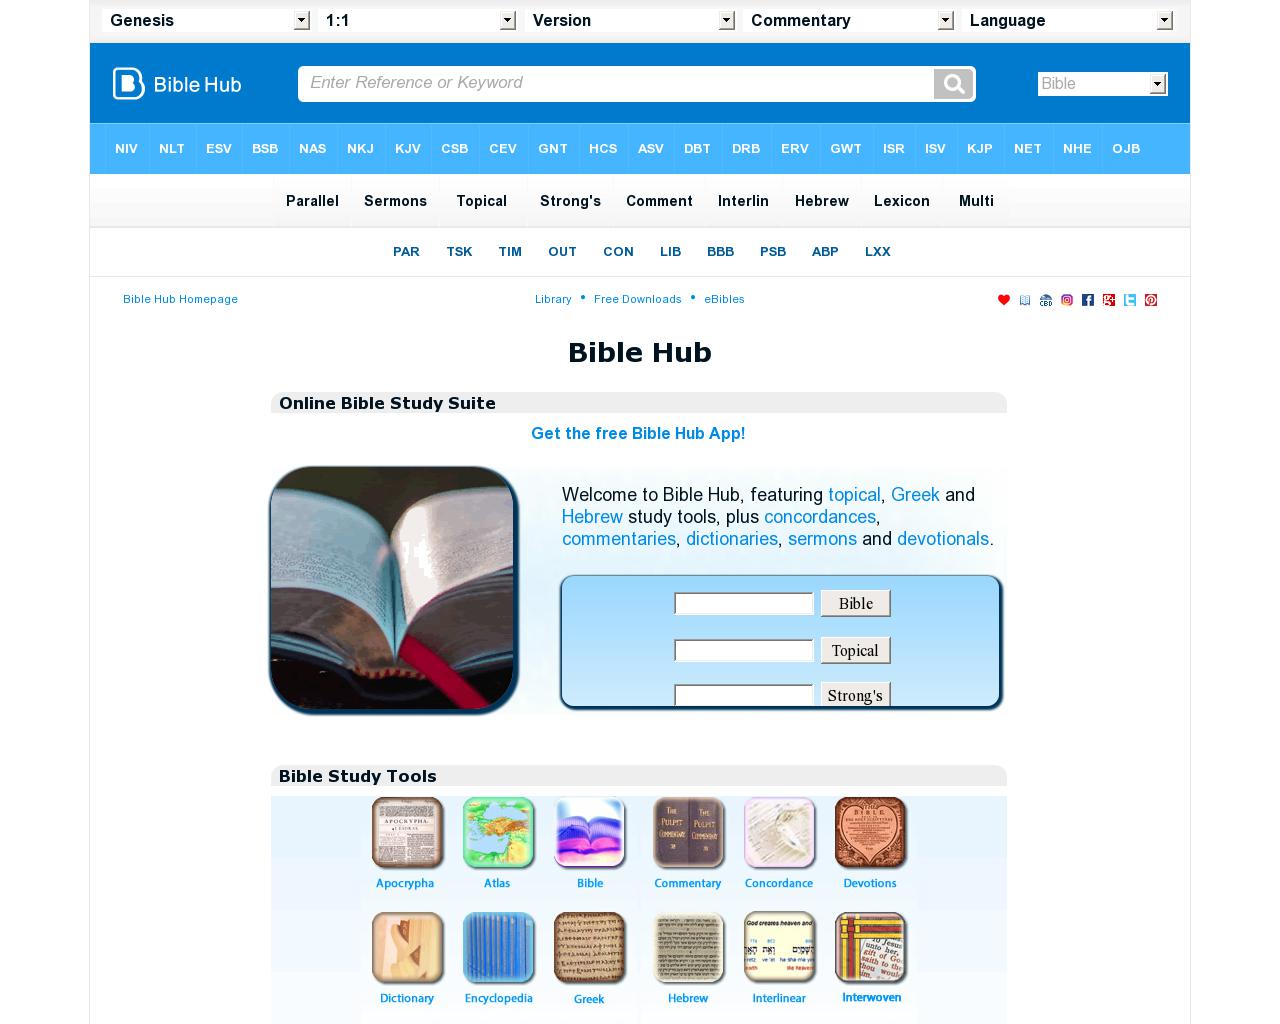 biblehub.com